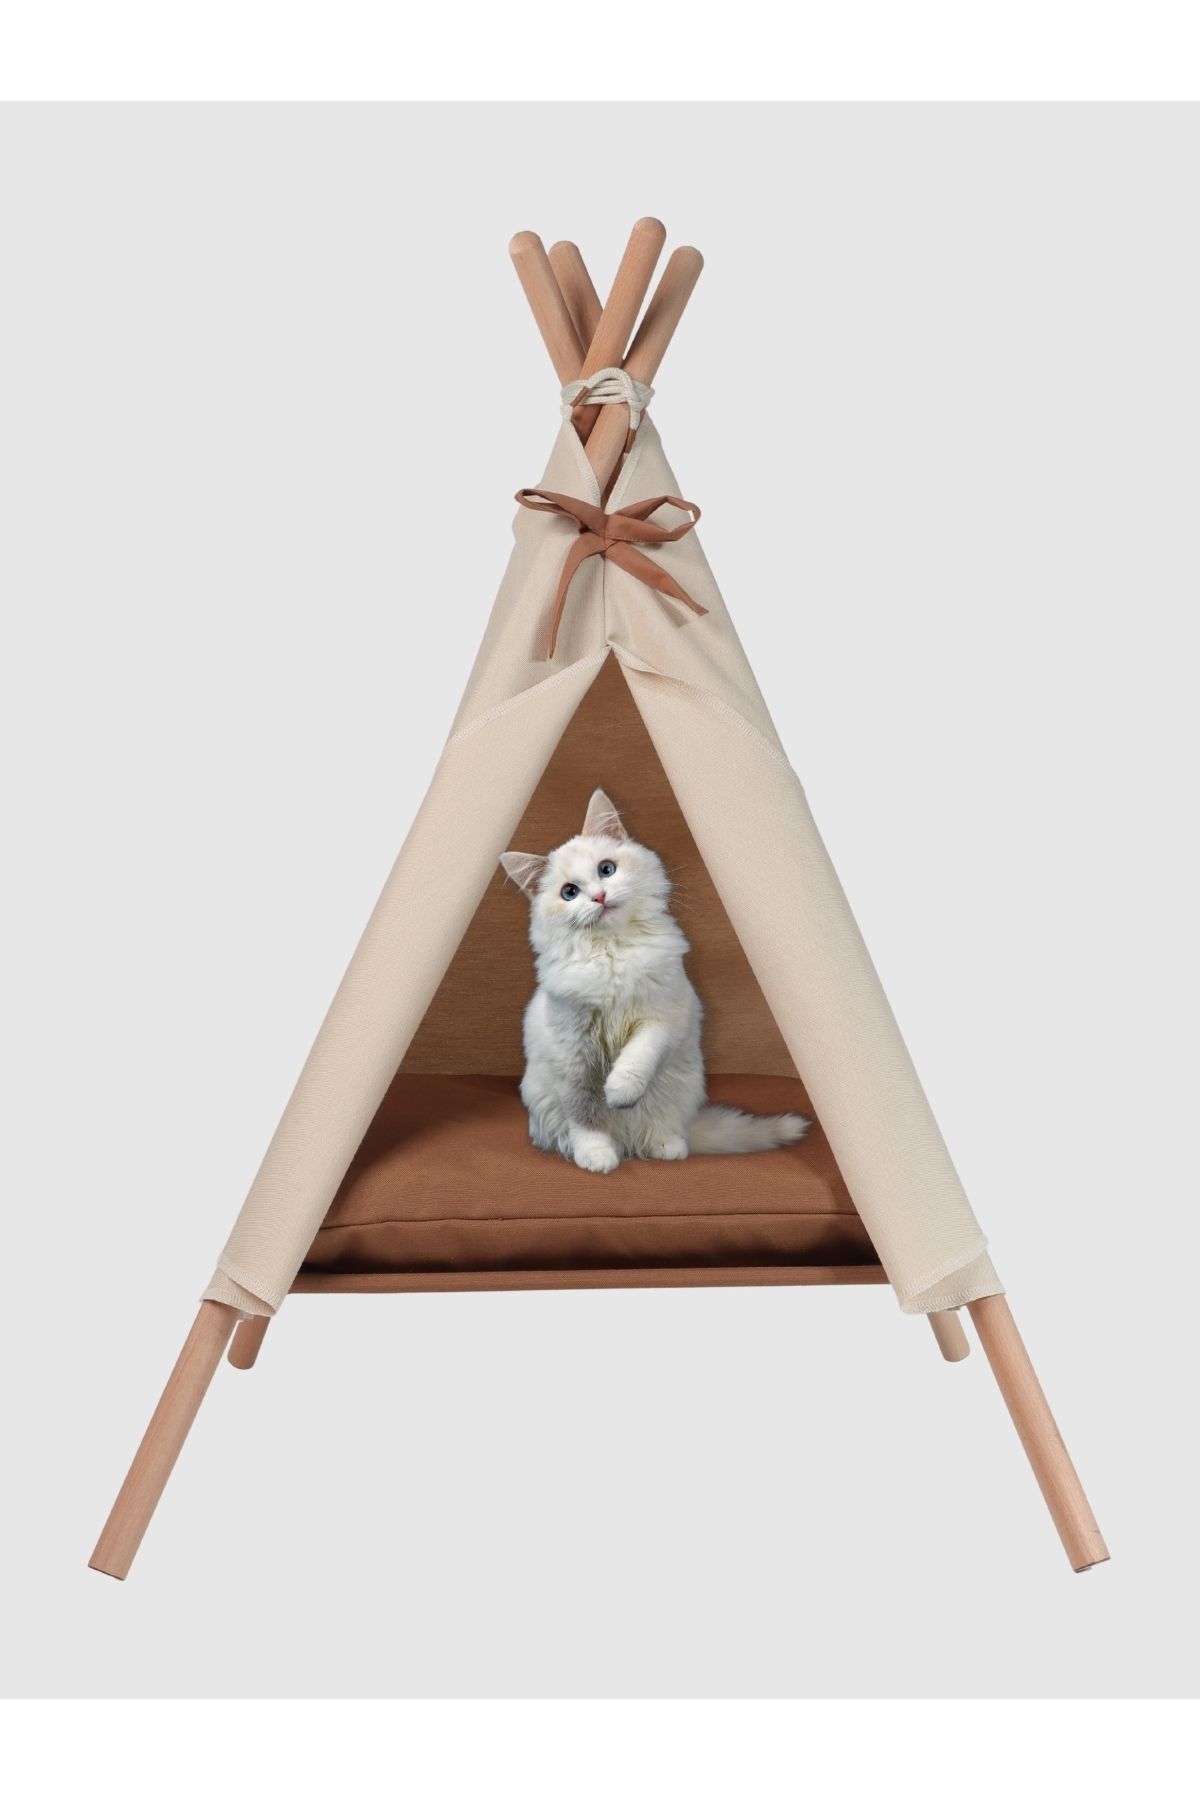 YHH Kids Kedi Çadırı Kedi Yatağı